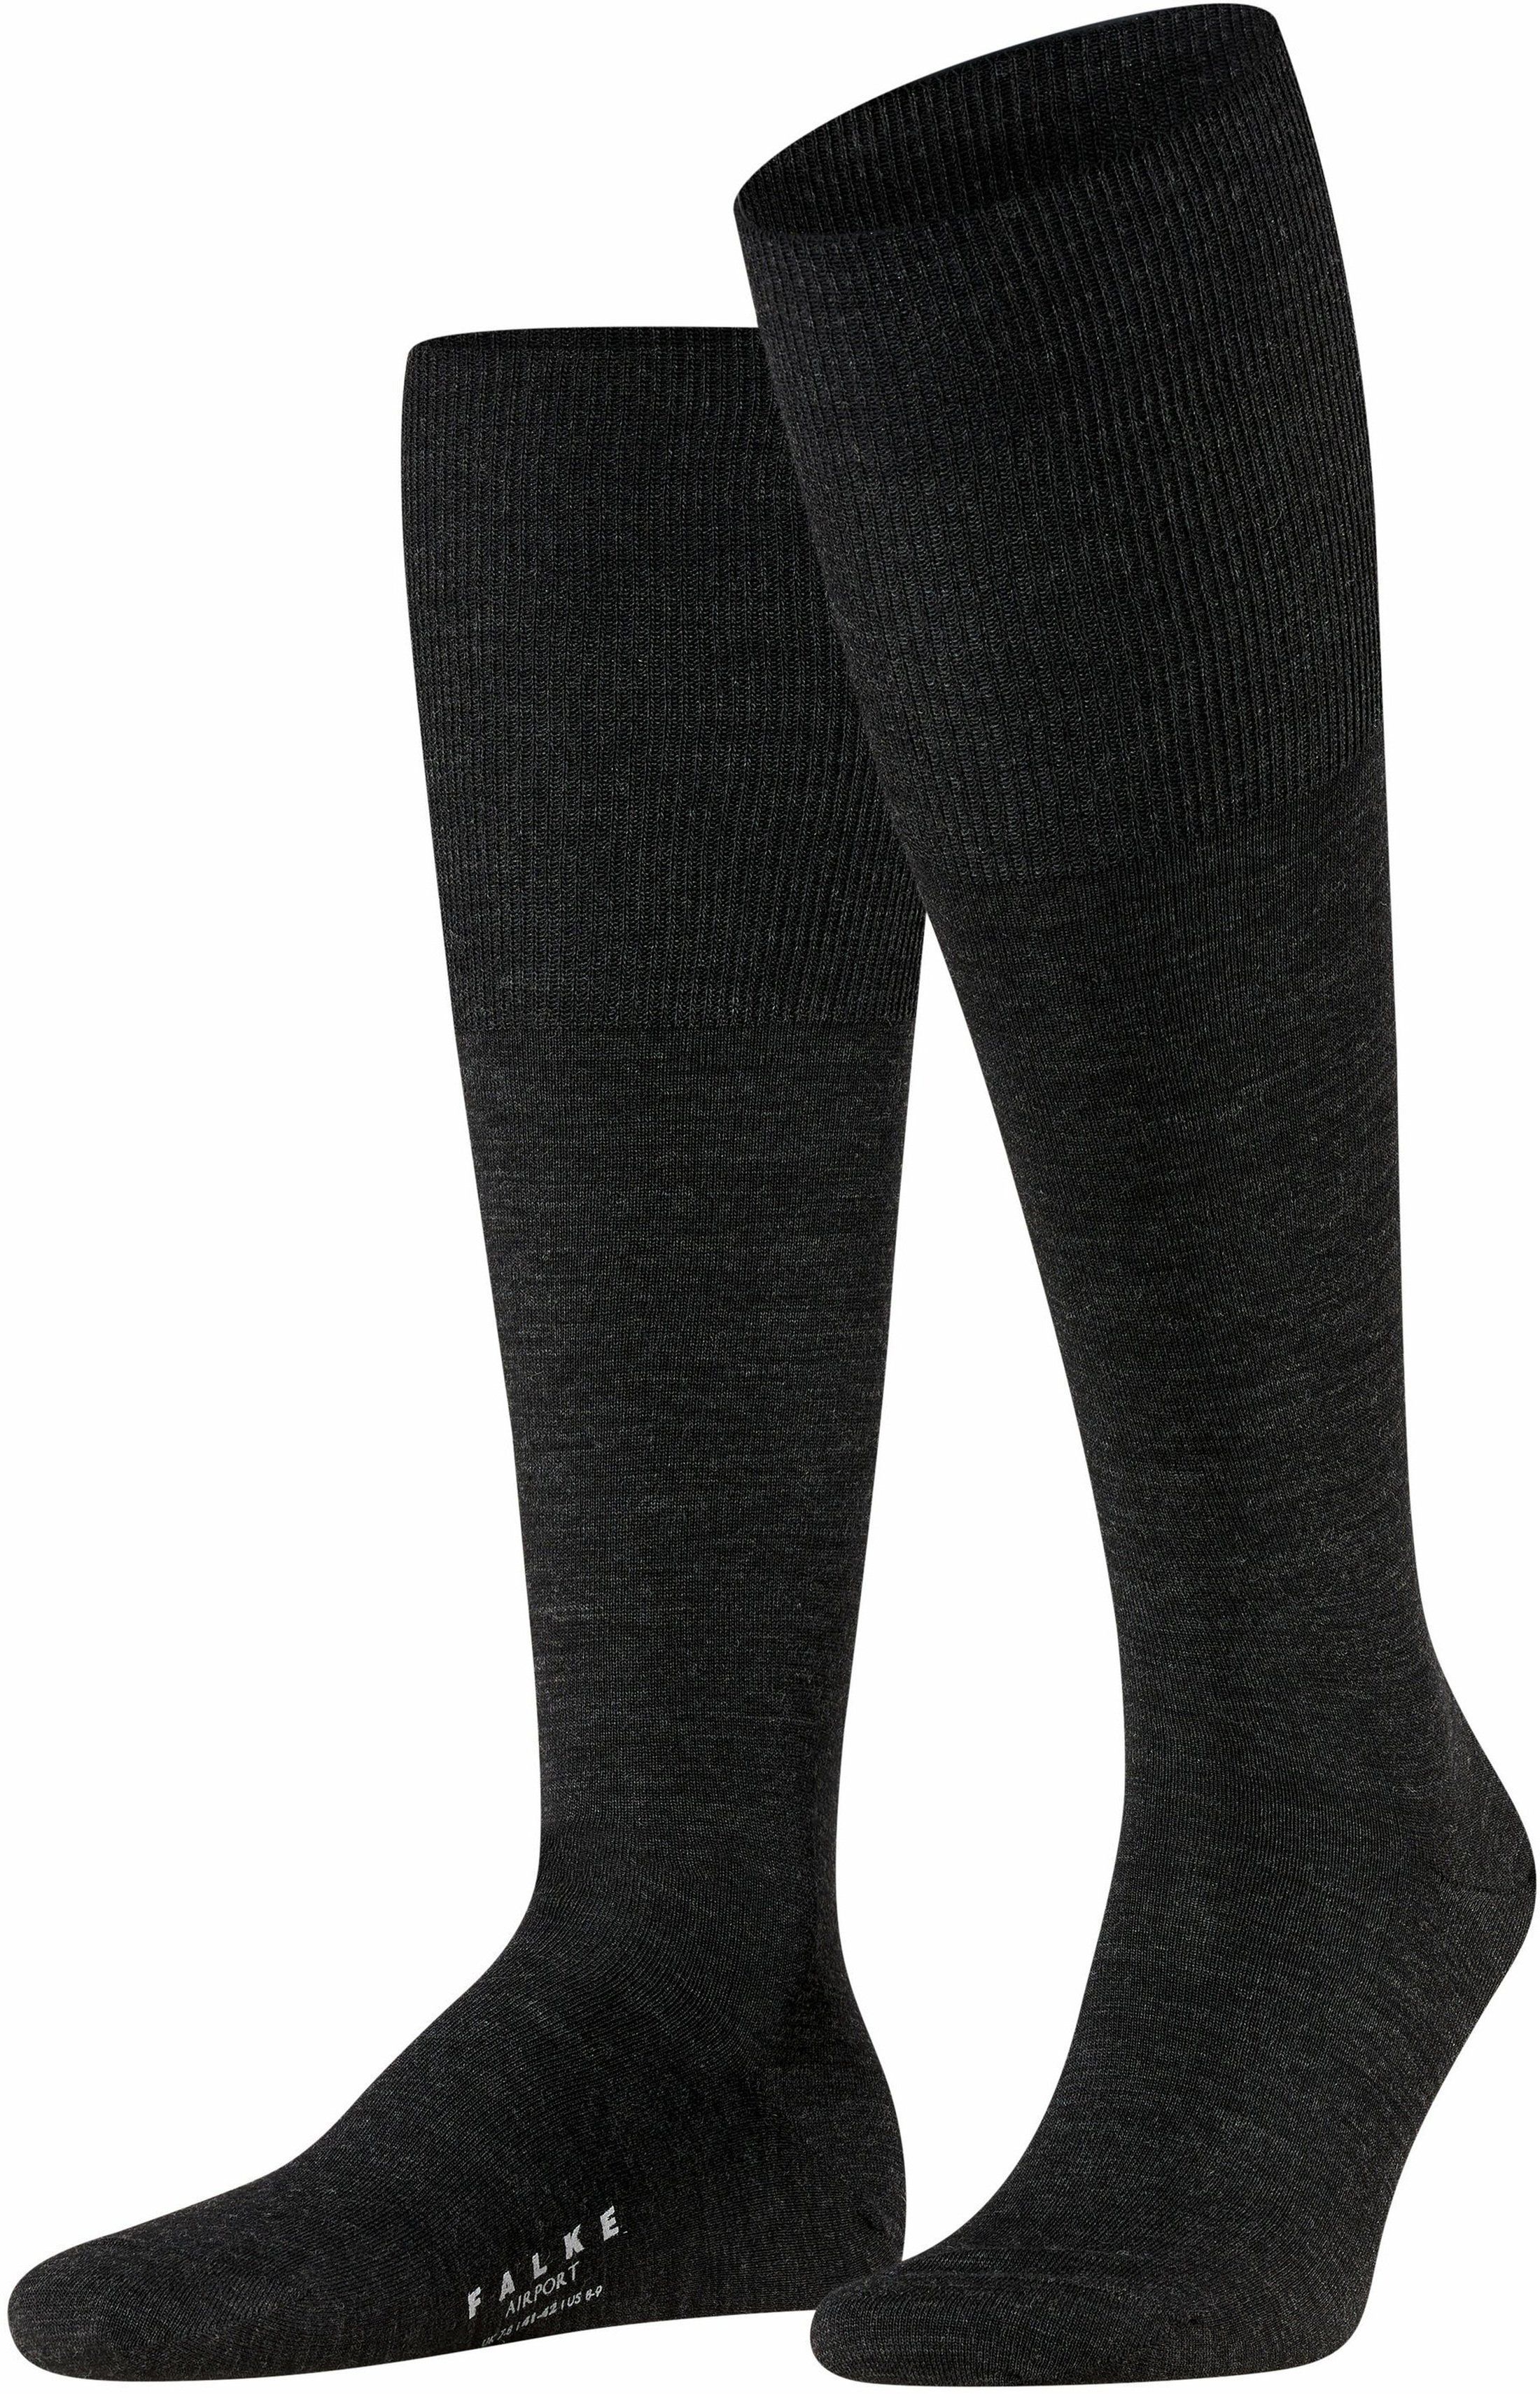 Falke Airport Knee Socks Dark 3080 Dark Grey Grey size 39-40